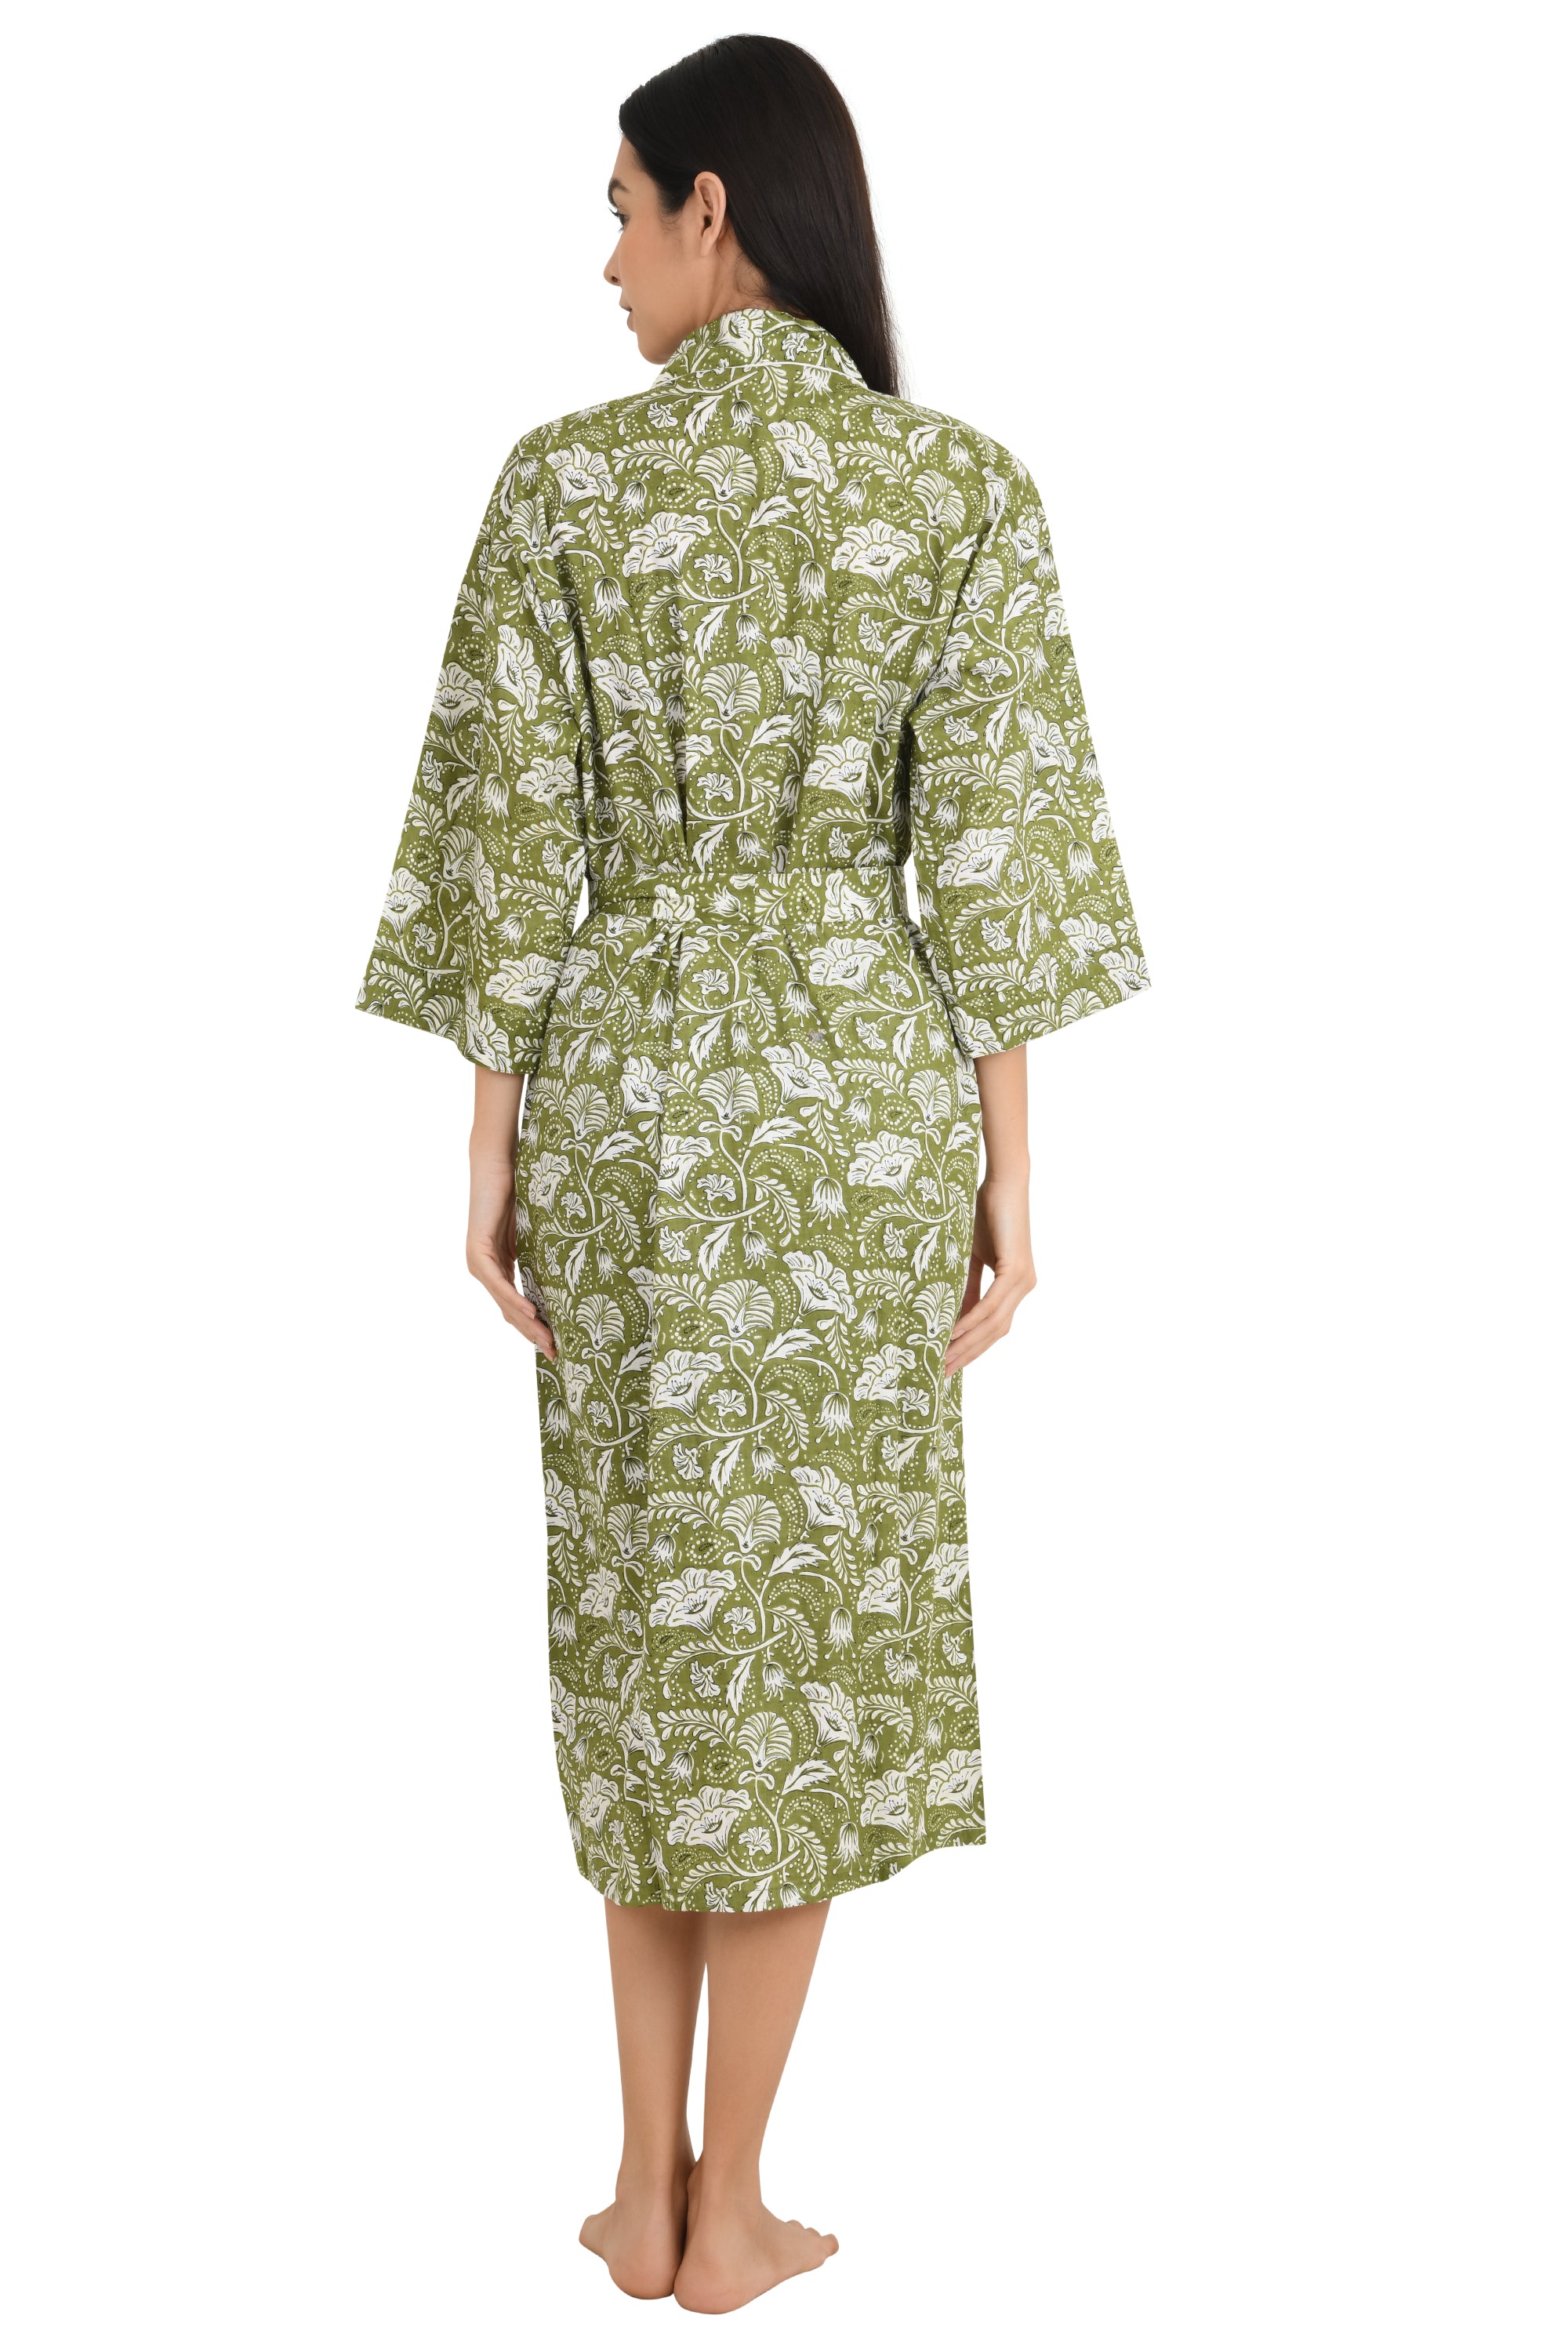 Pure Cotton Kimono Indian Handprinted Boho House Robe Summer Dress | Green White Floral Print | Beach Cover Up Wear | Christmas Present